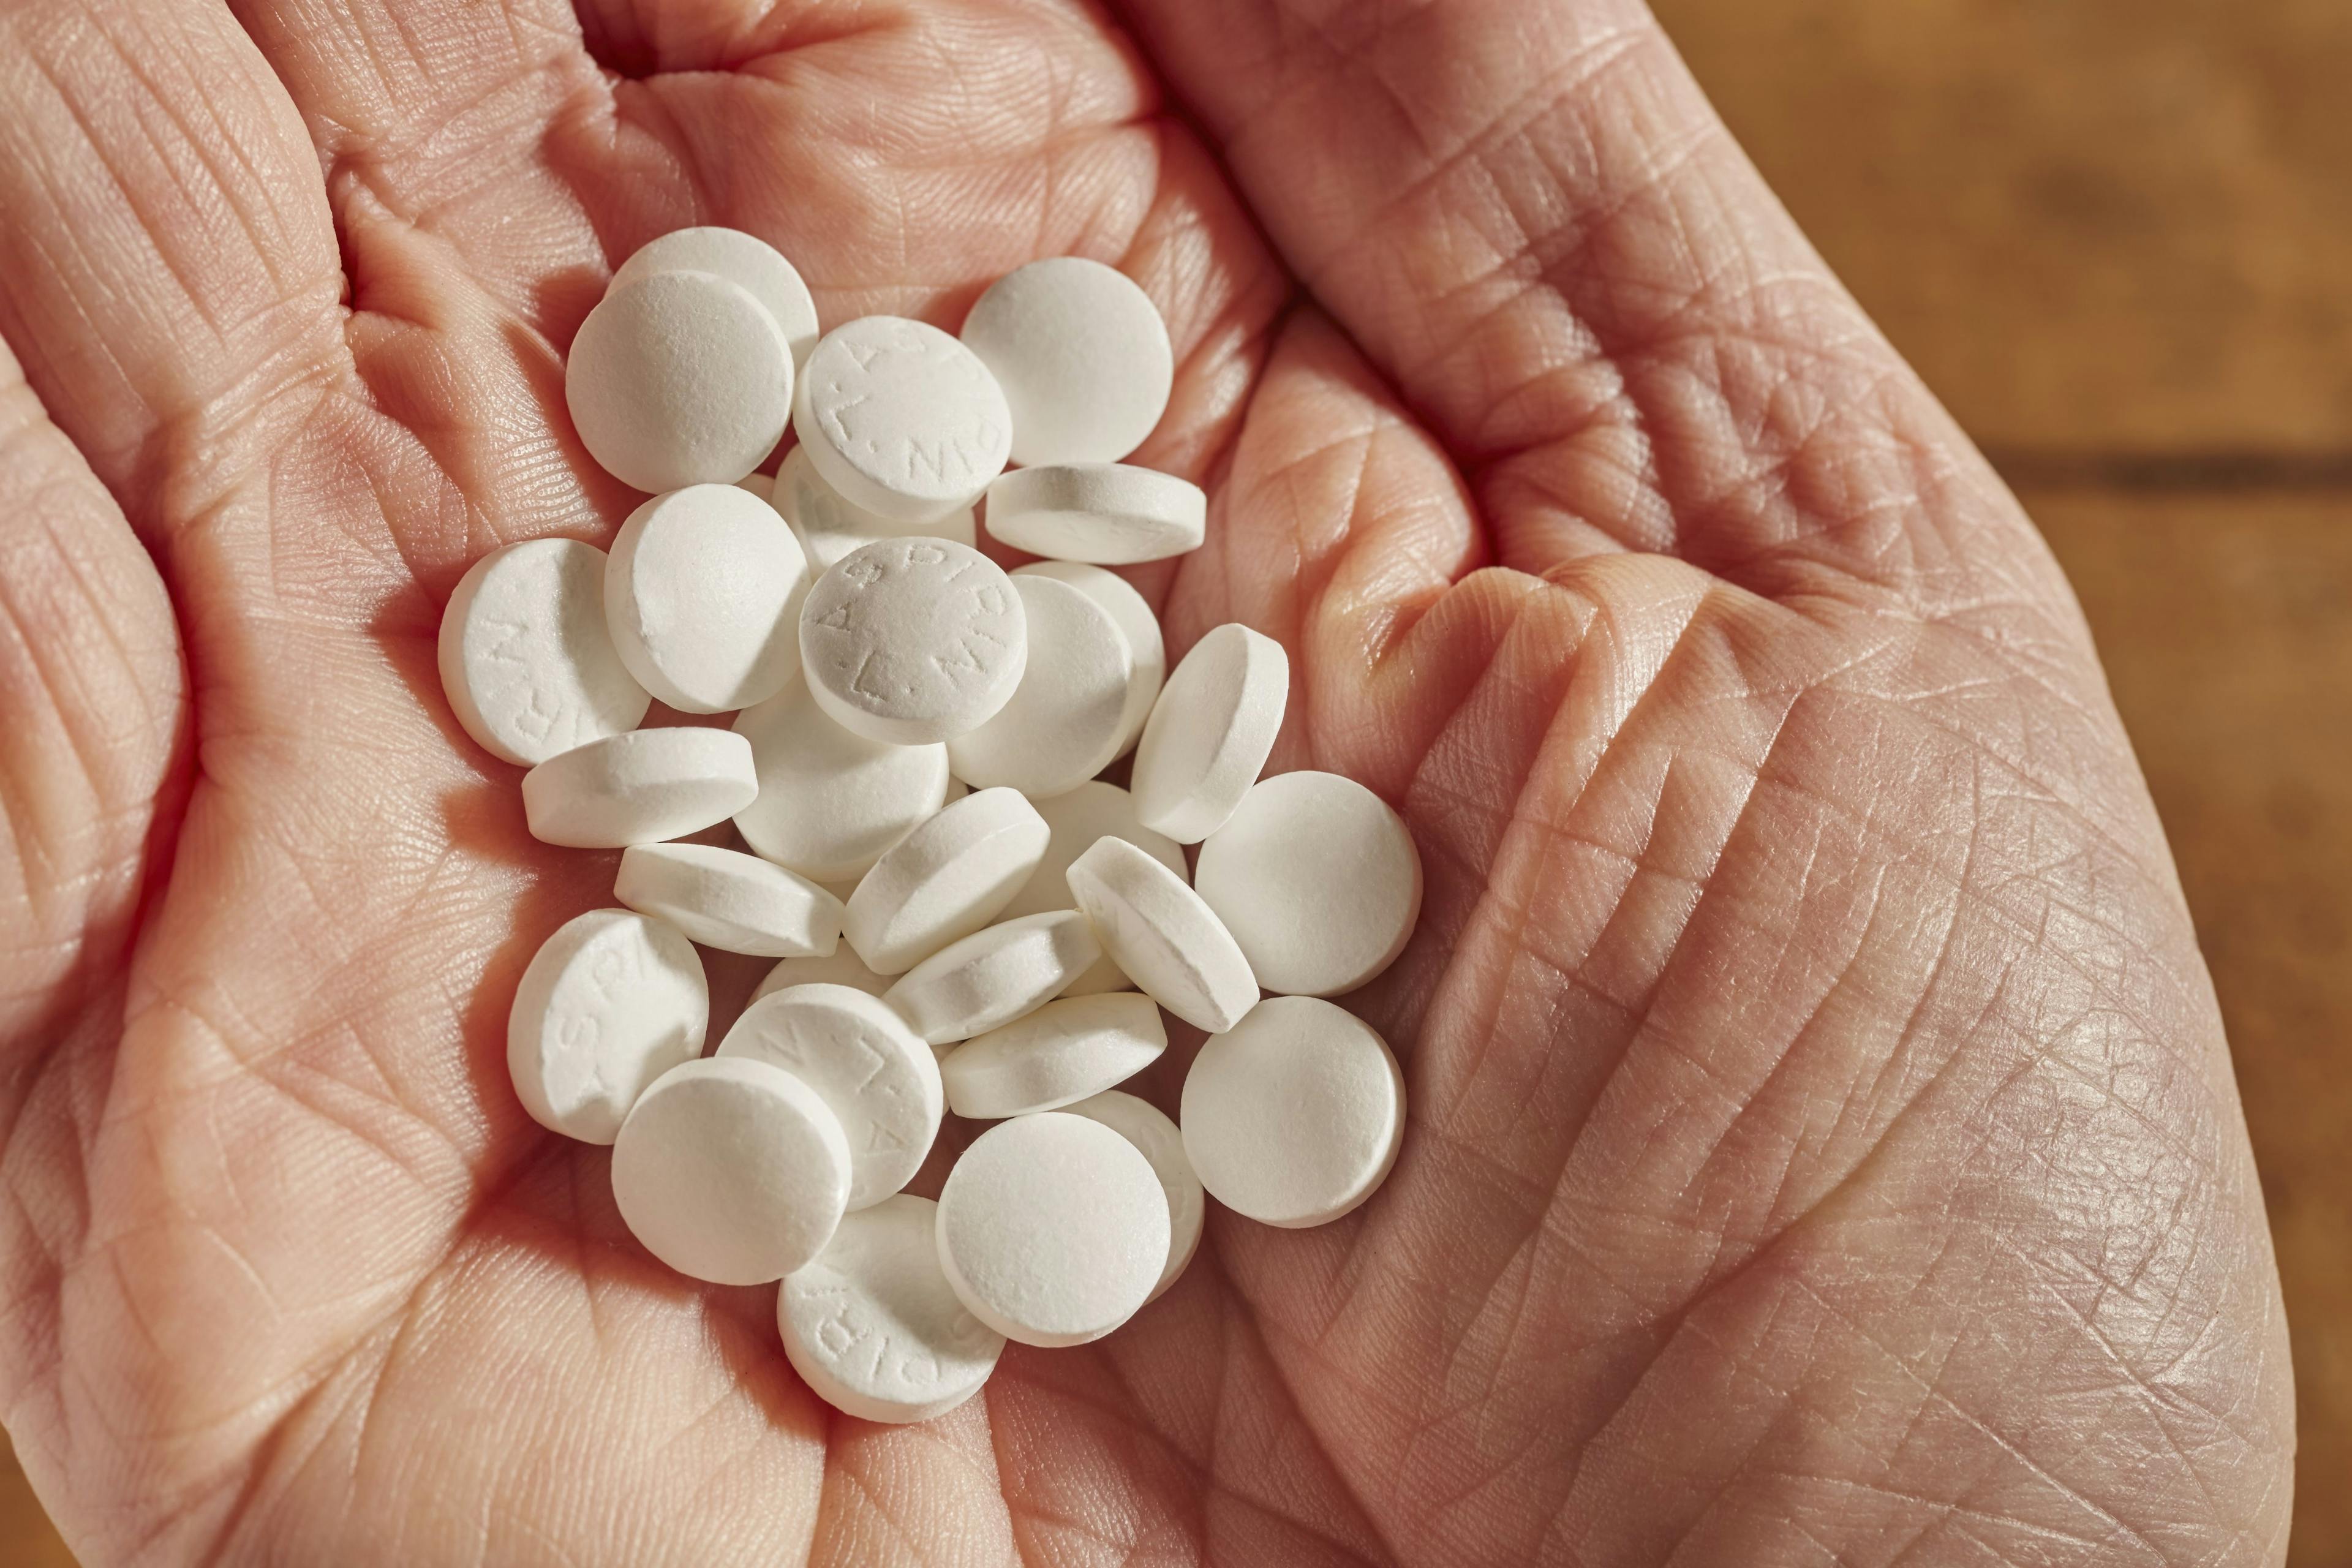 Lean A3 Improves Opioid Prescribing in Rheumatology